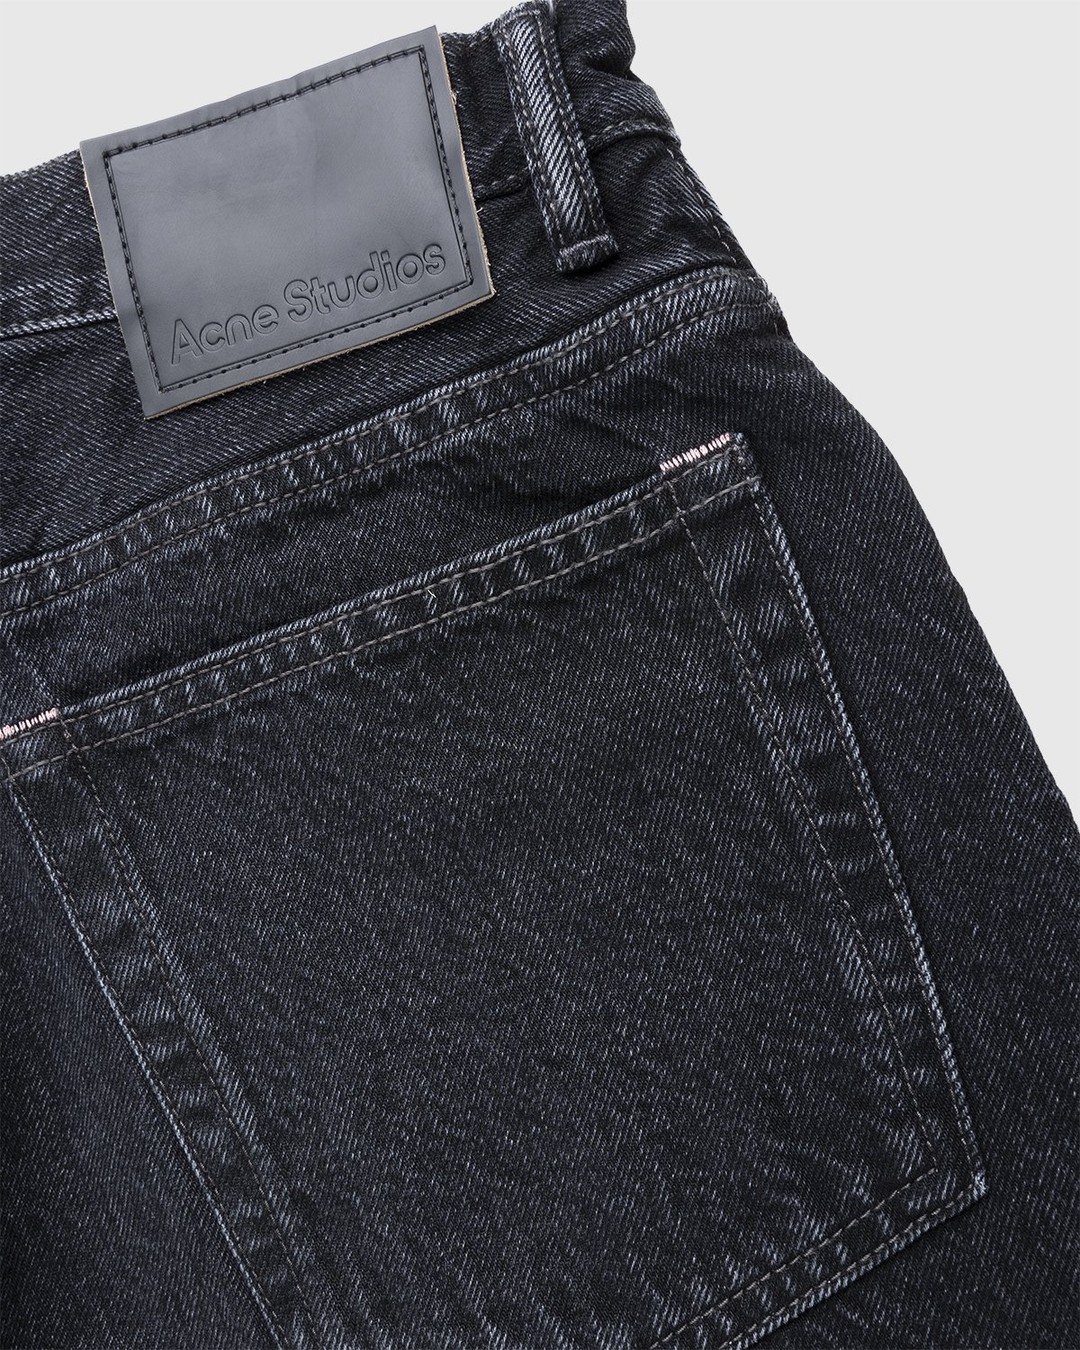 Acne Studios – Brutus 2021M Boot Cut Jeans Black - Denim - Black - Image 3